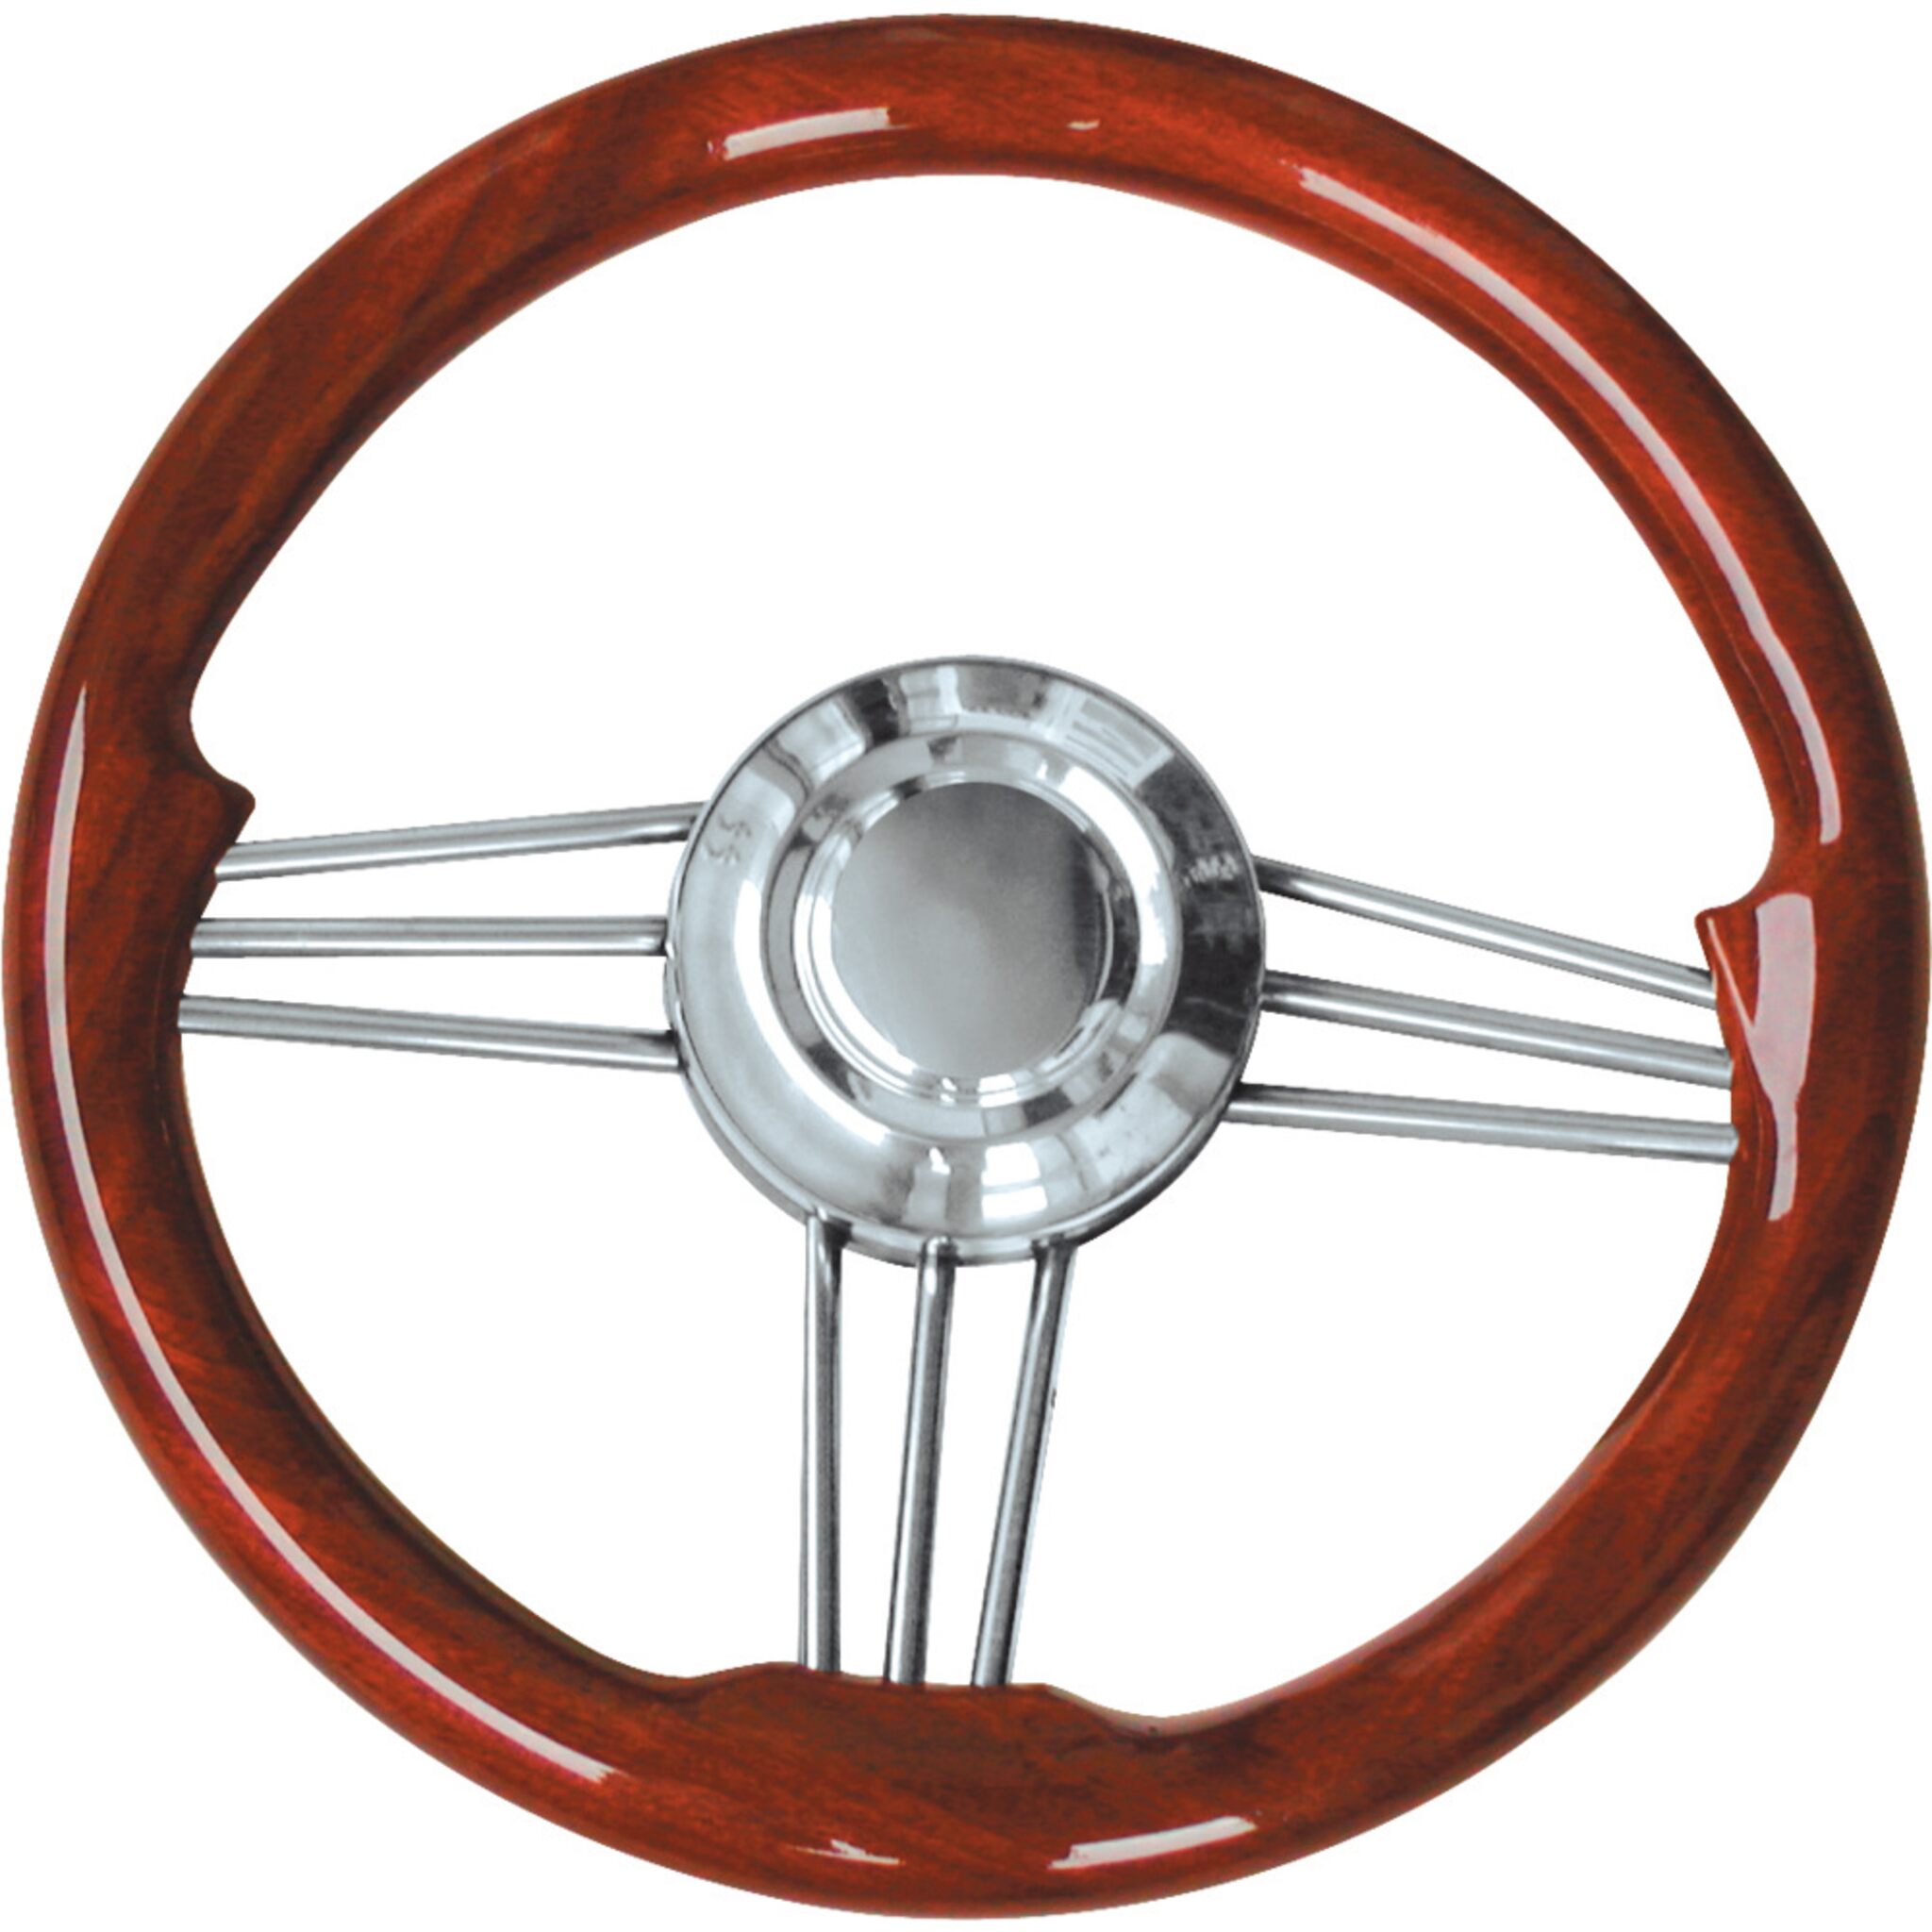 Mahogany wood steering wheel